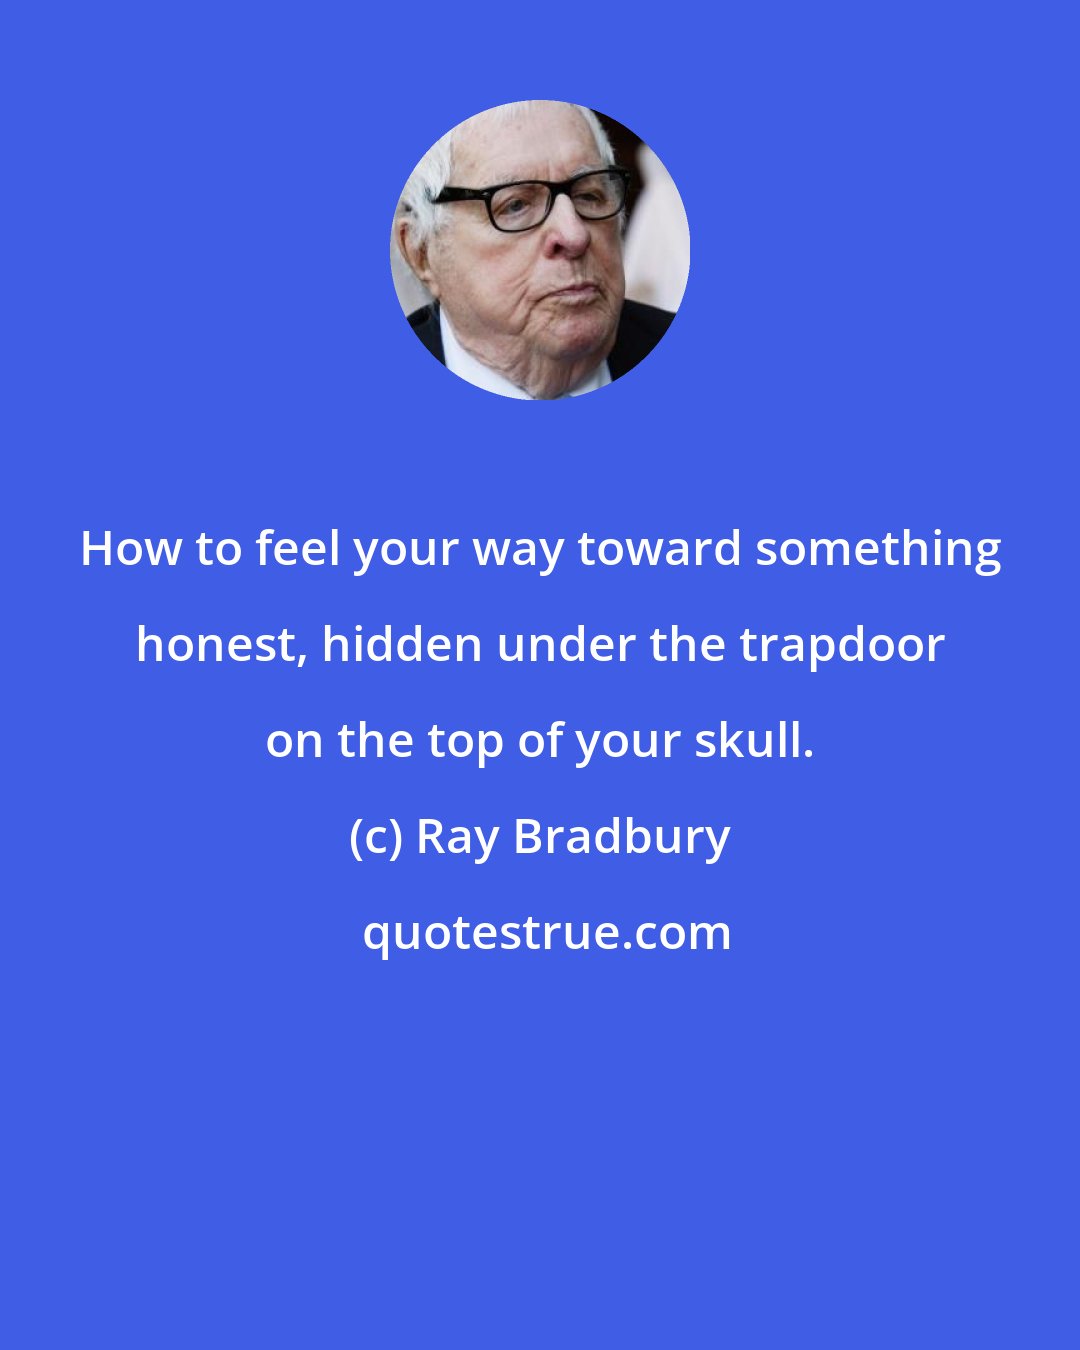 Ray Bradbury: How to feel your way toward something honest, hidden under the trapdoor on the top of your skull.